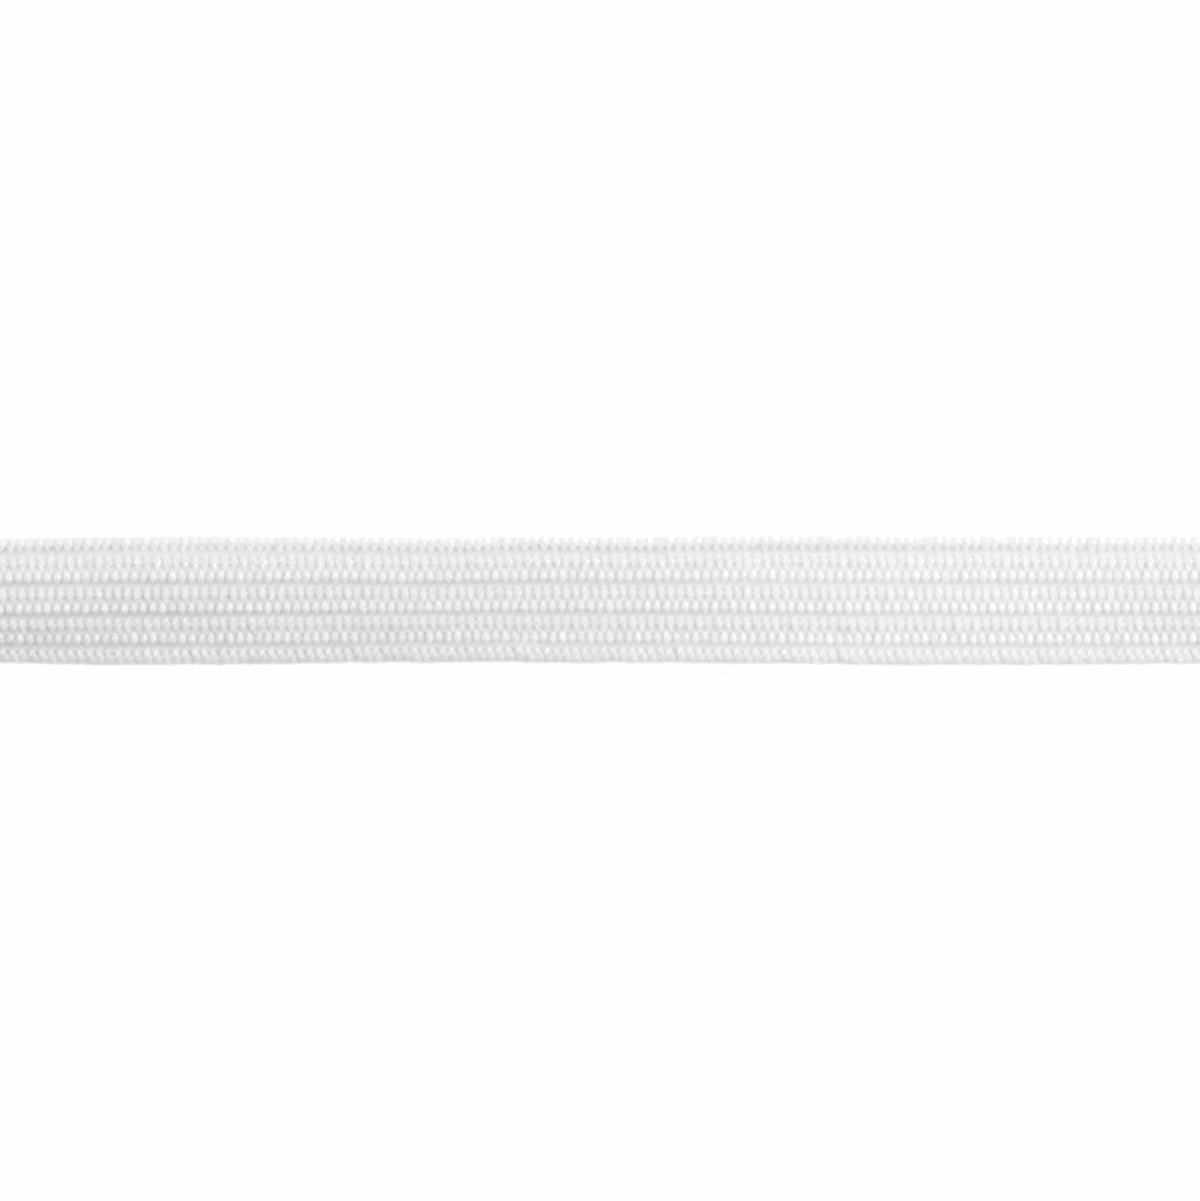 Sewing Gem - Braided Elastic - 9mm Wide - Black or White